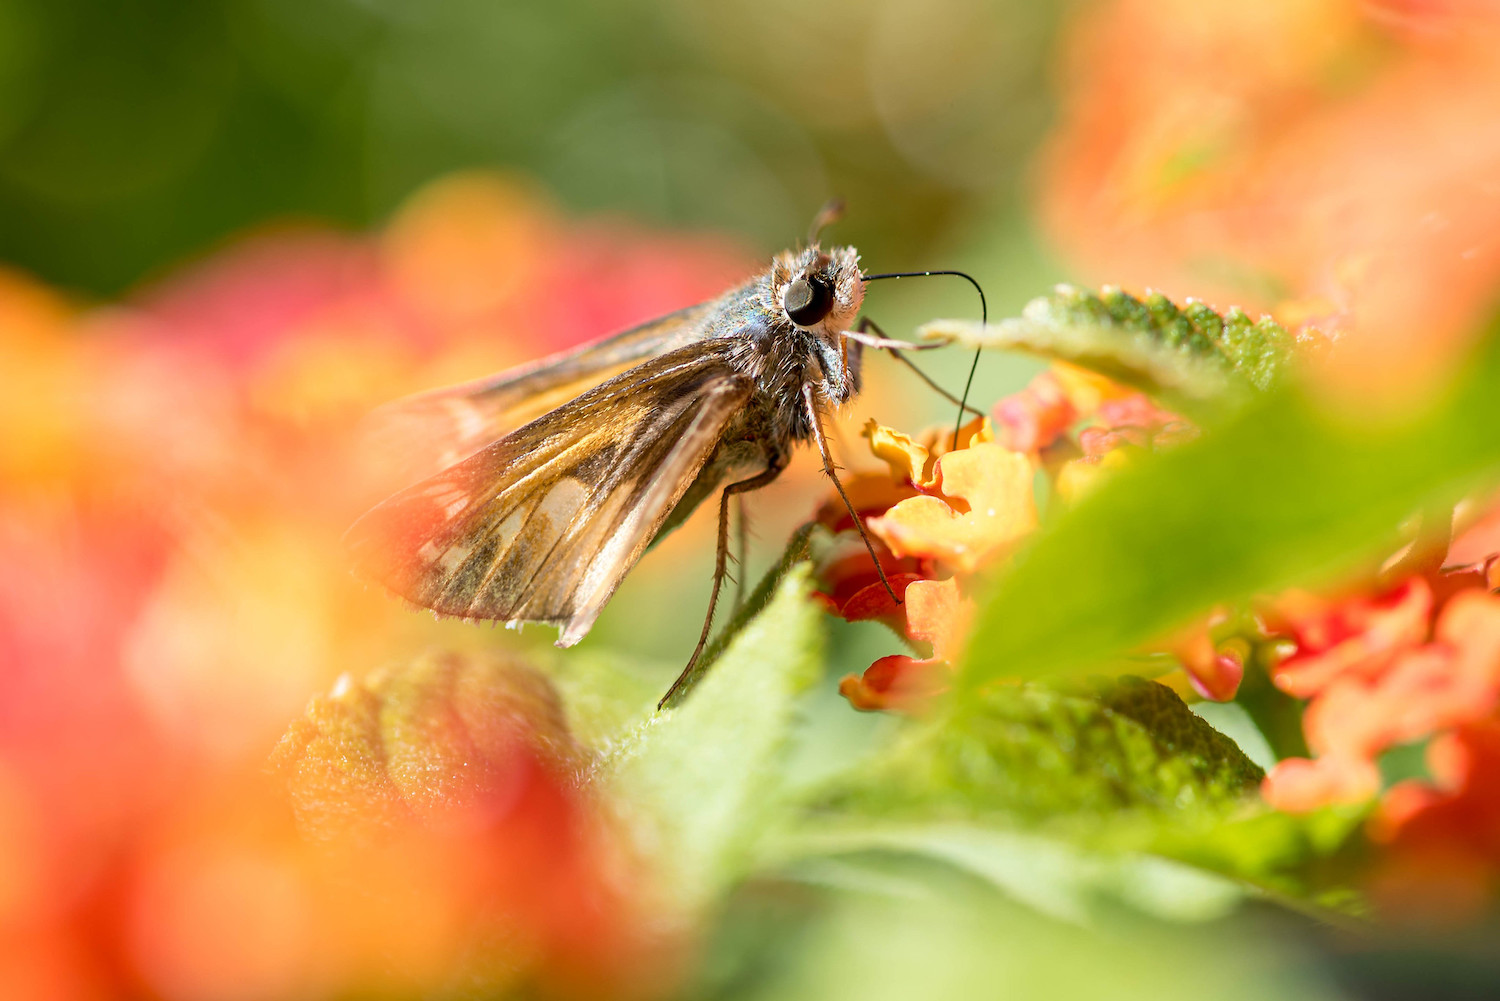 Best lenses for macro photography moth on leaf